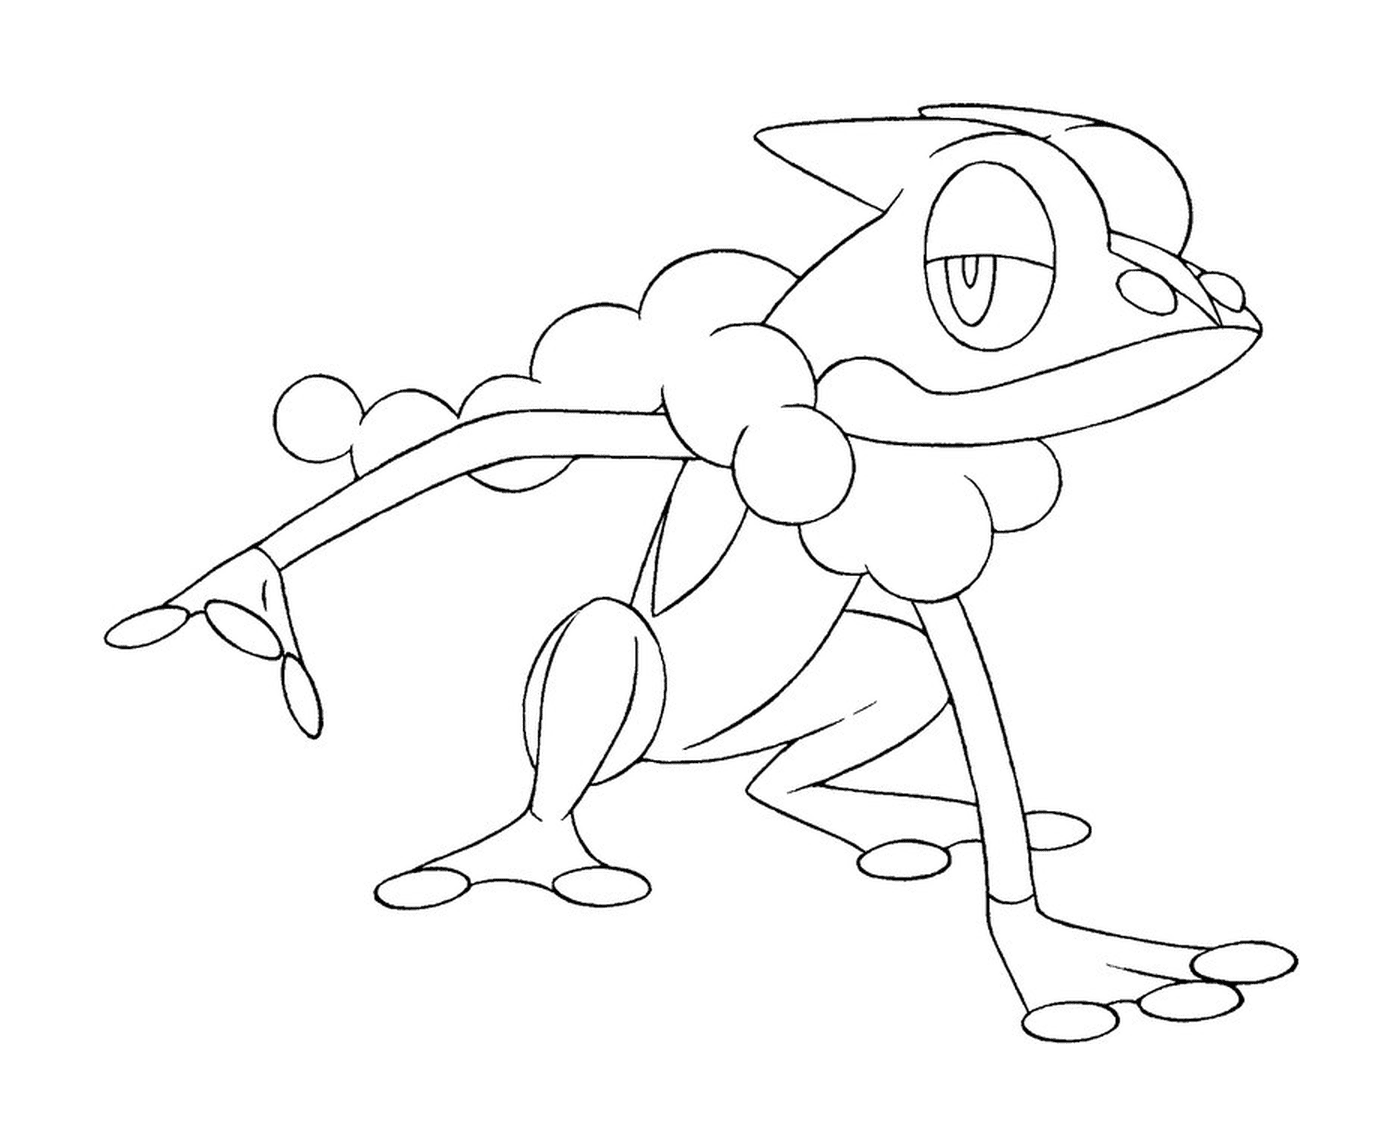  A drawing of Pokémon 